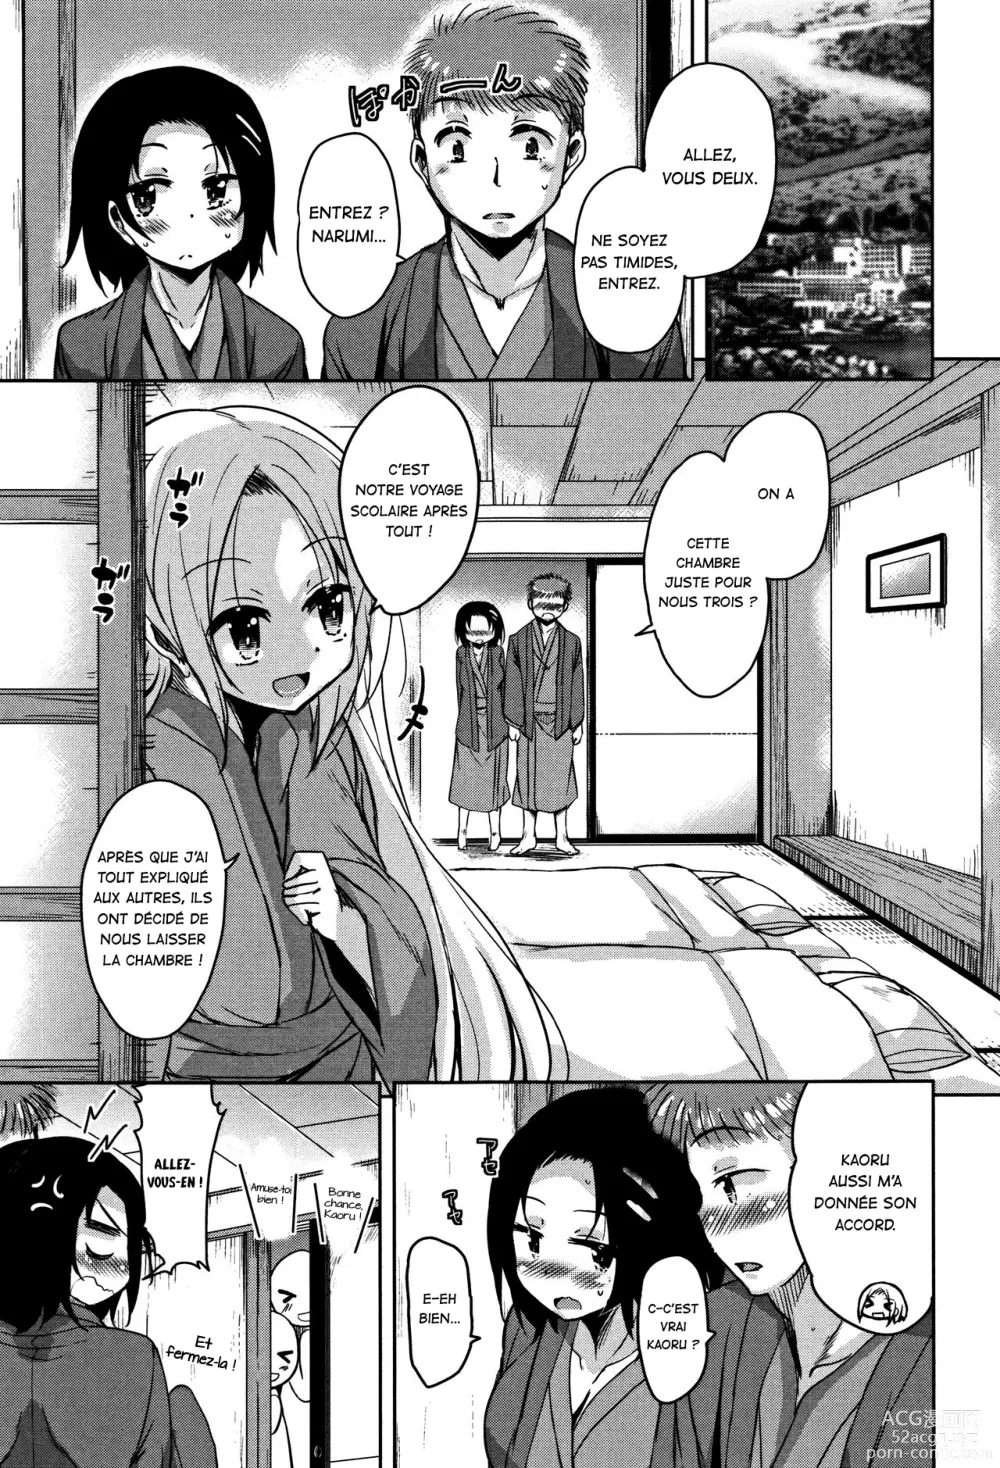 Page 50 of manga La dette TS de Narumi Chapitre d'Akihiro + Chapitre de Narumi + Chapitre de Kaoru